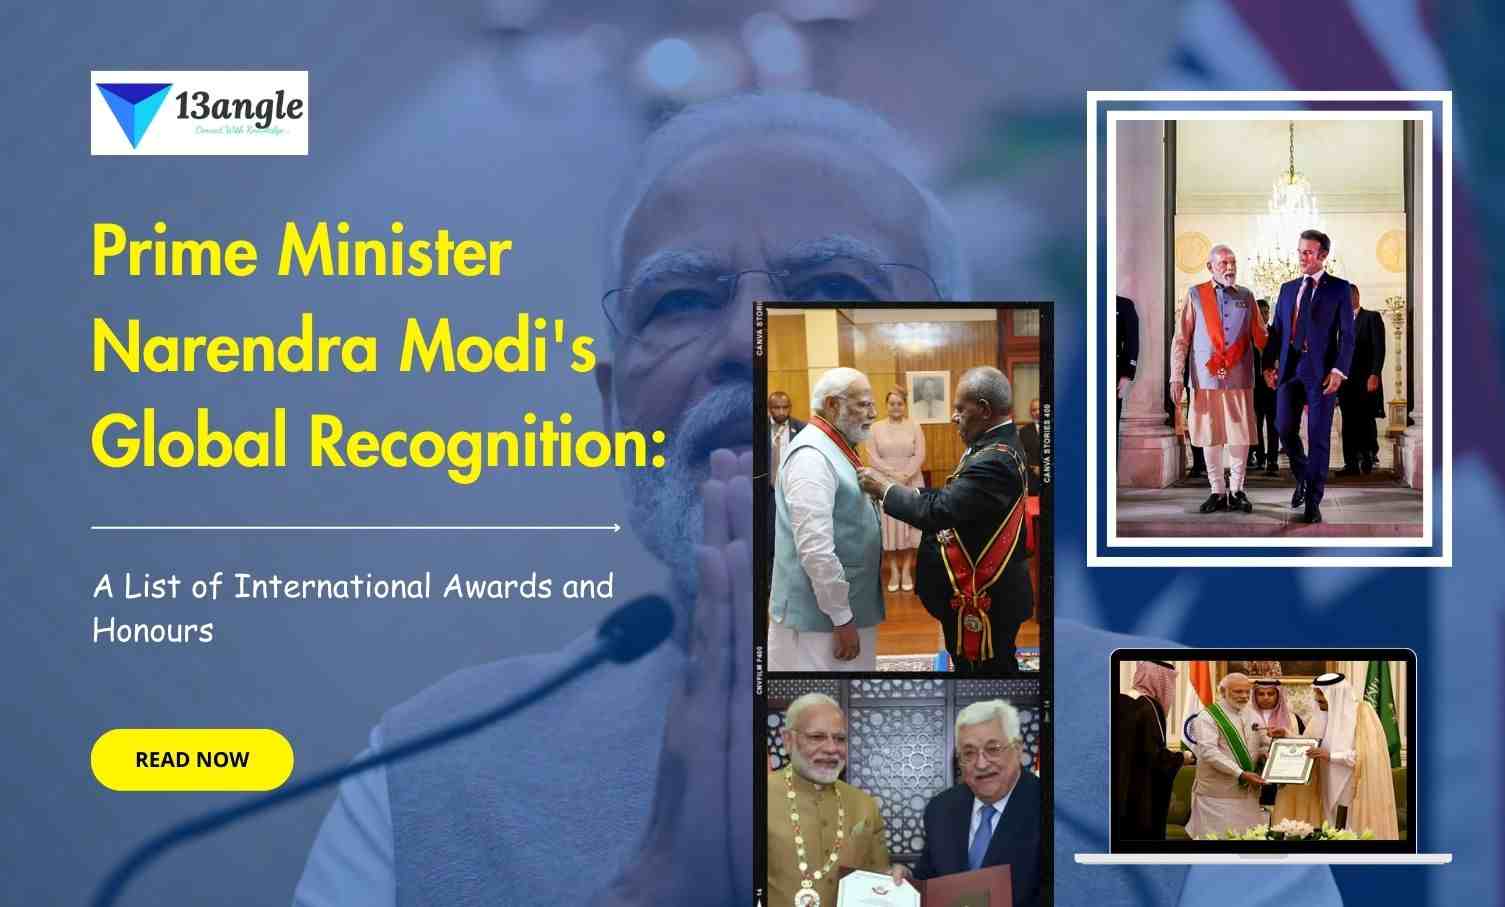 Prime Minister Narendra Modi's Global Recognition- 13angle.com